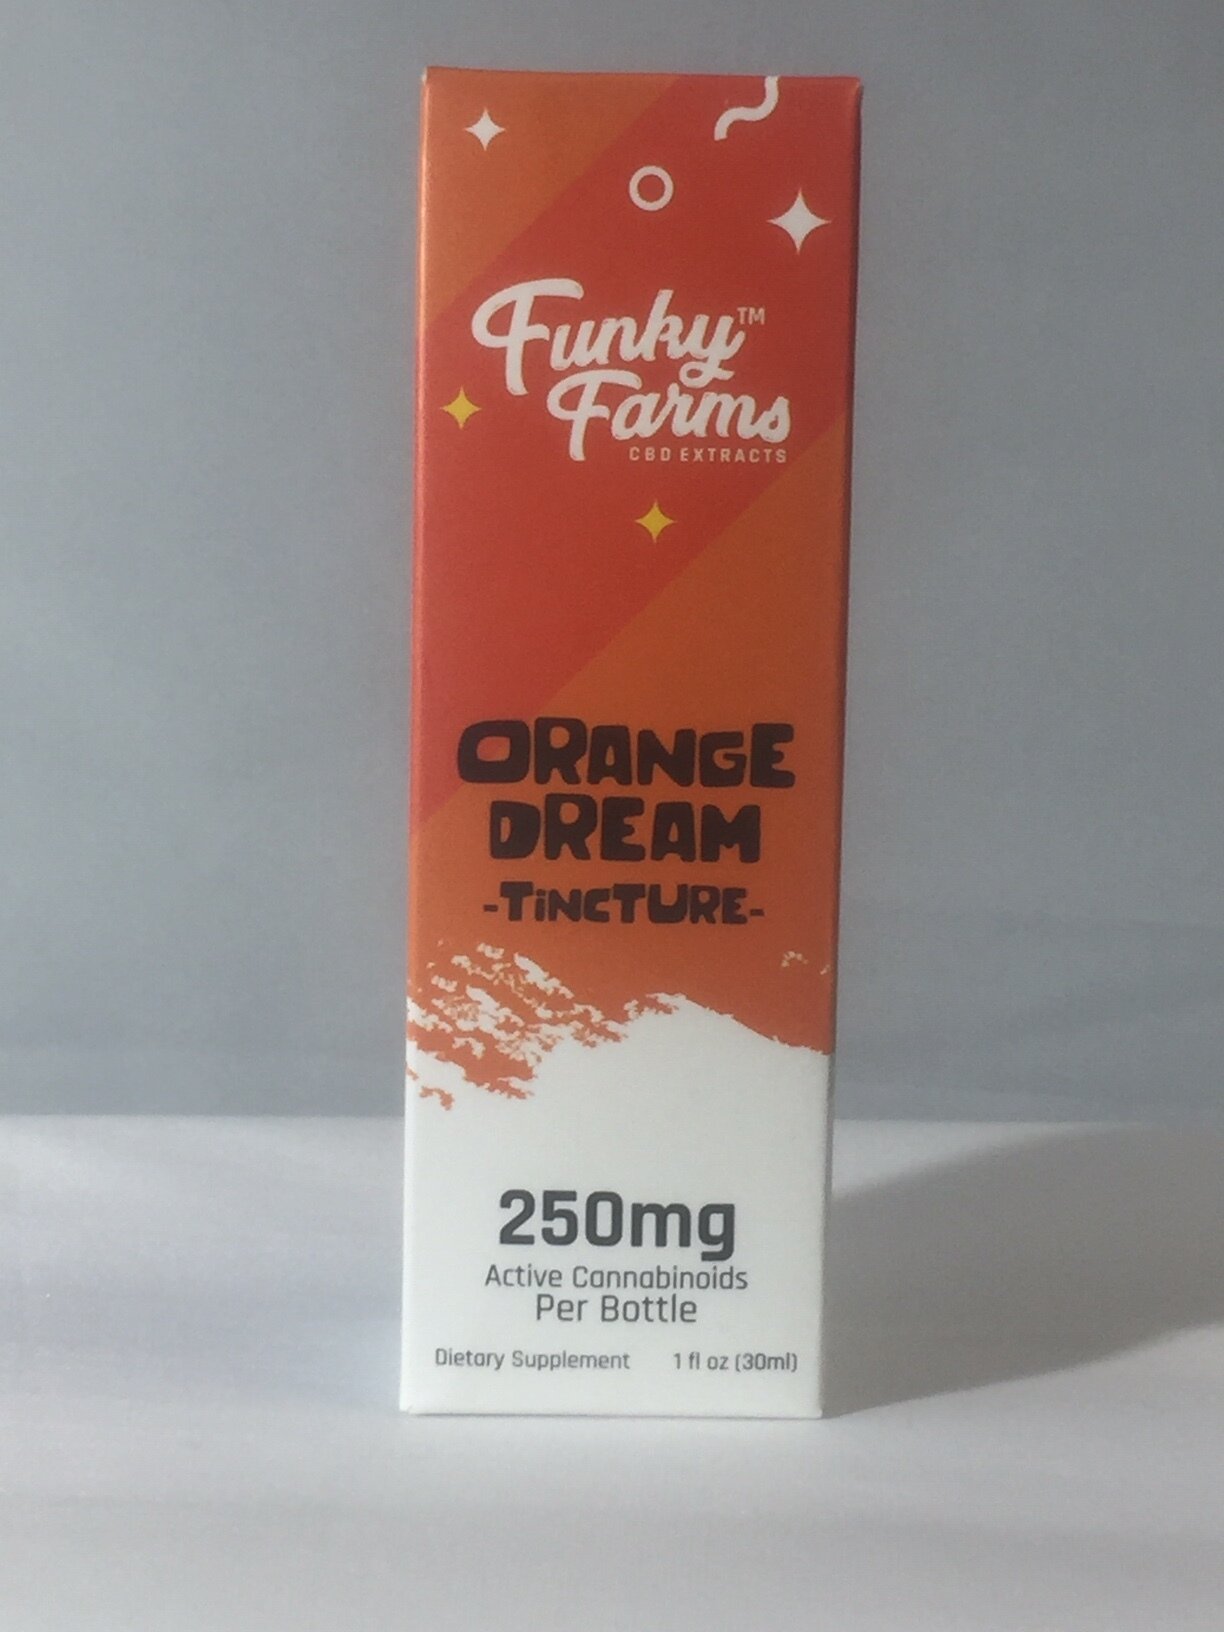 Orange Dream Tincture from Funky Farms.JPG